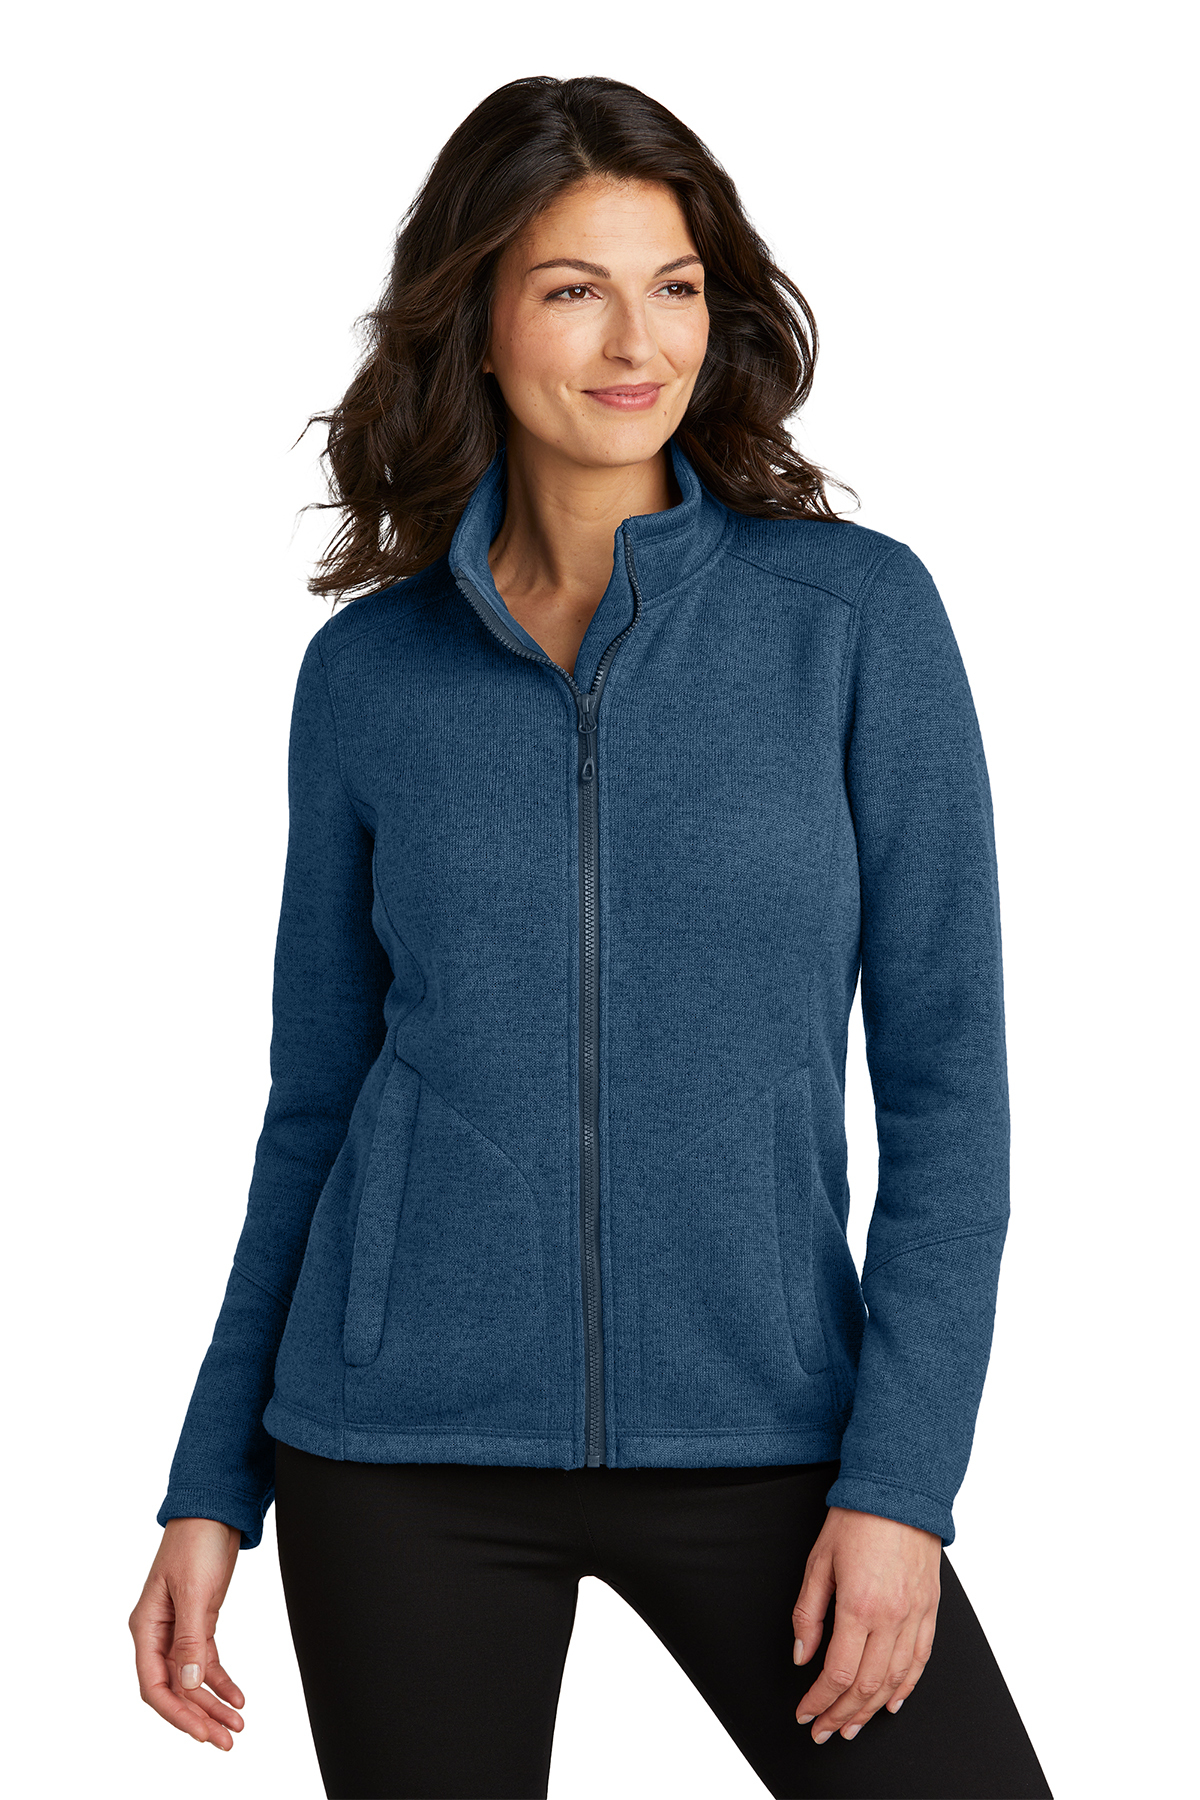 Port Authority Ladies Arc Sweater Fleece Jacket, Product